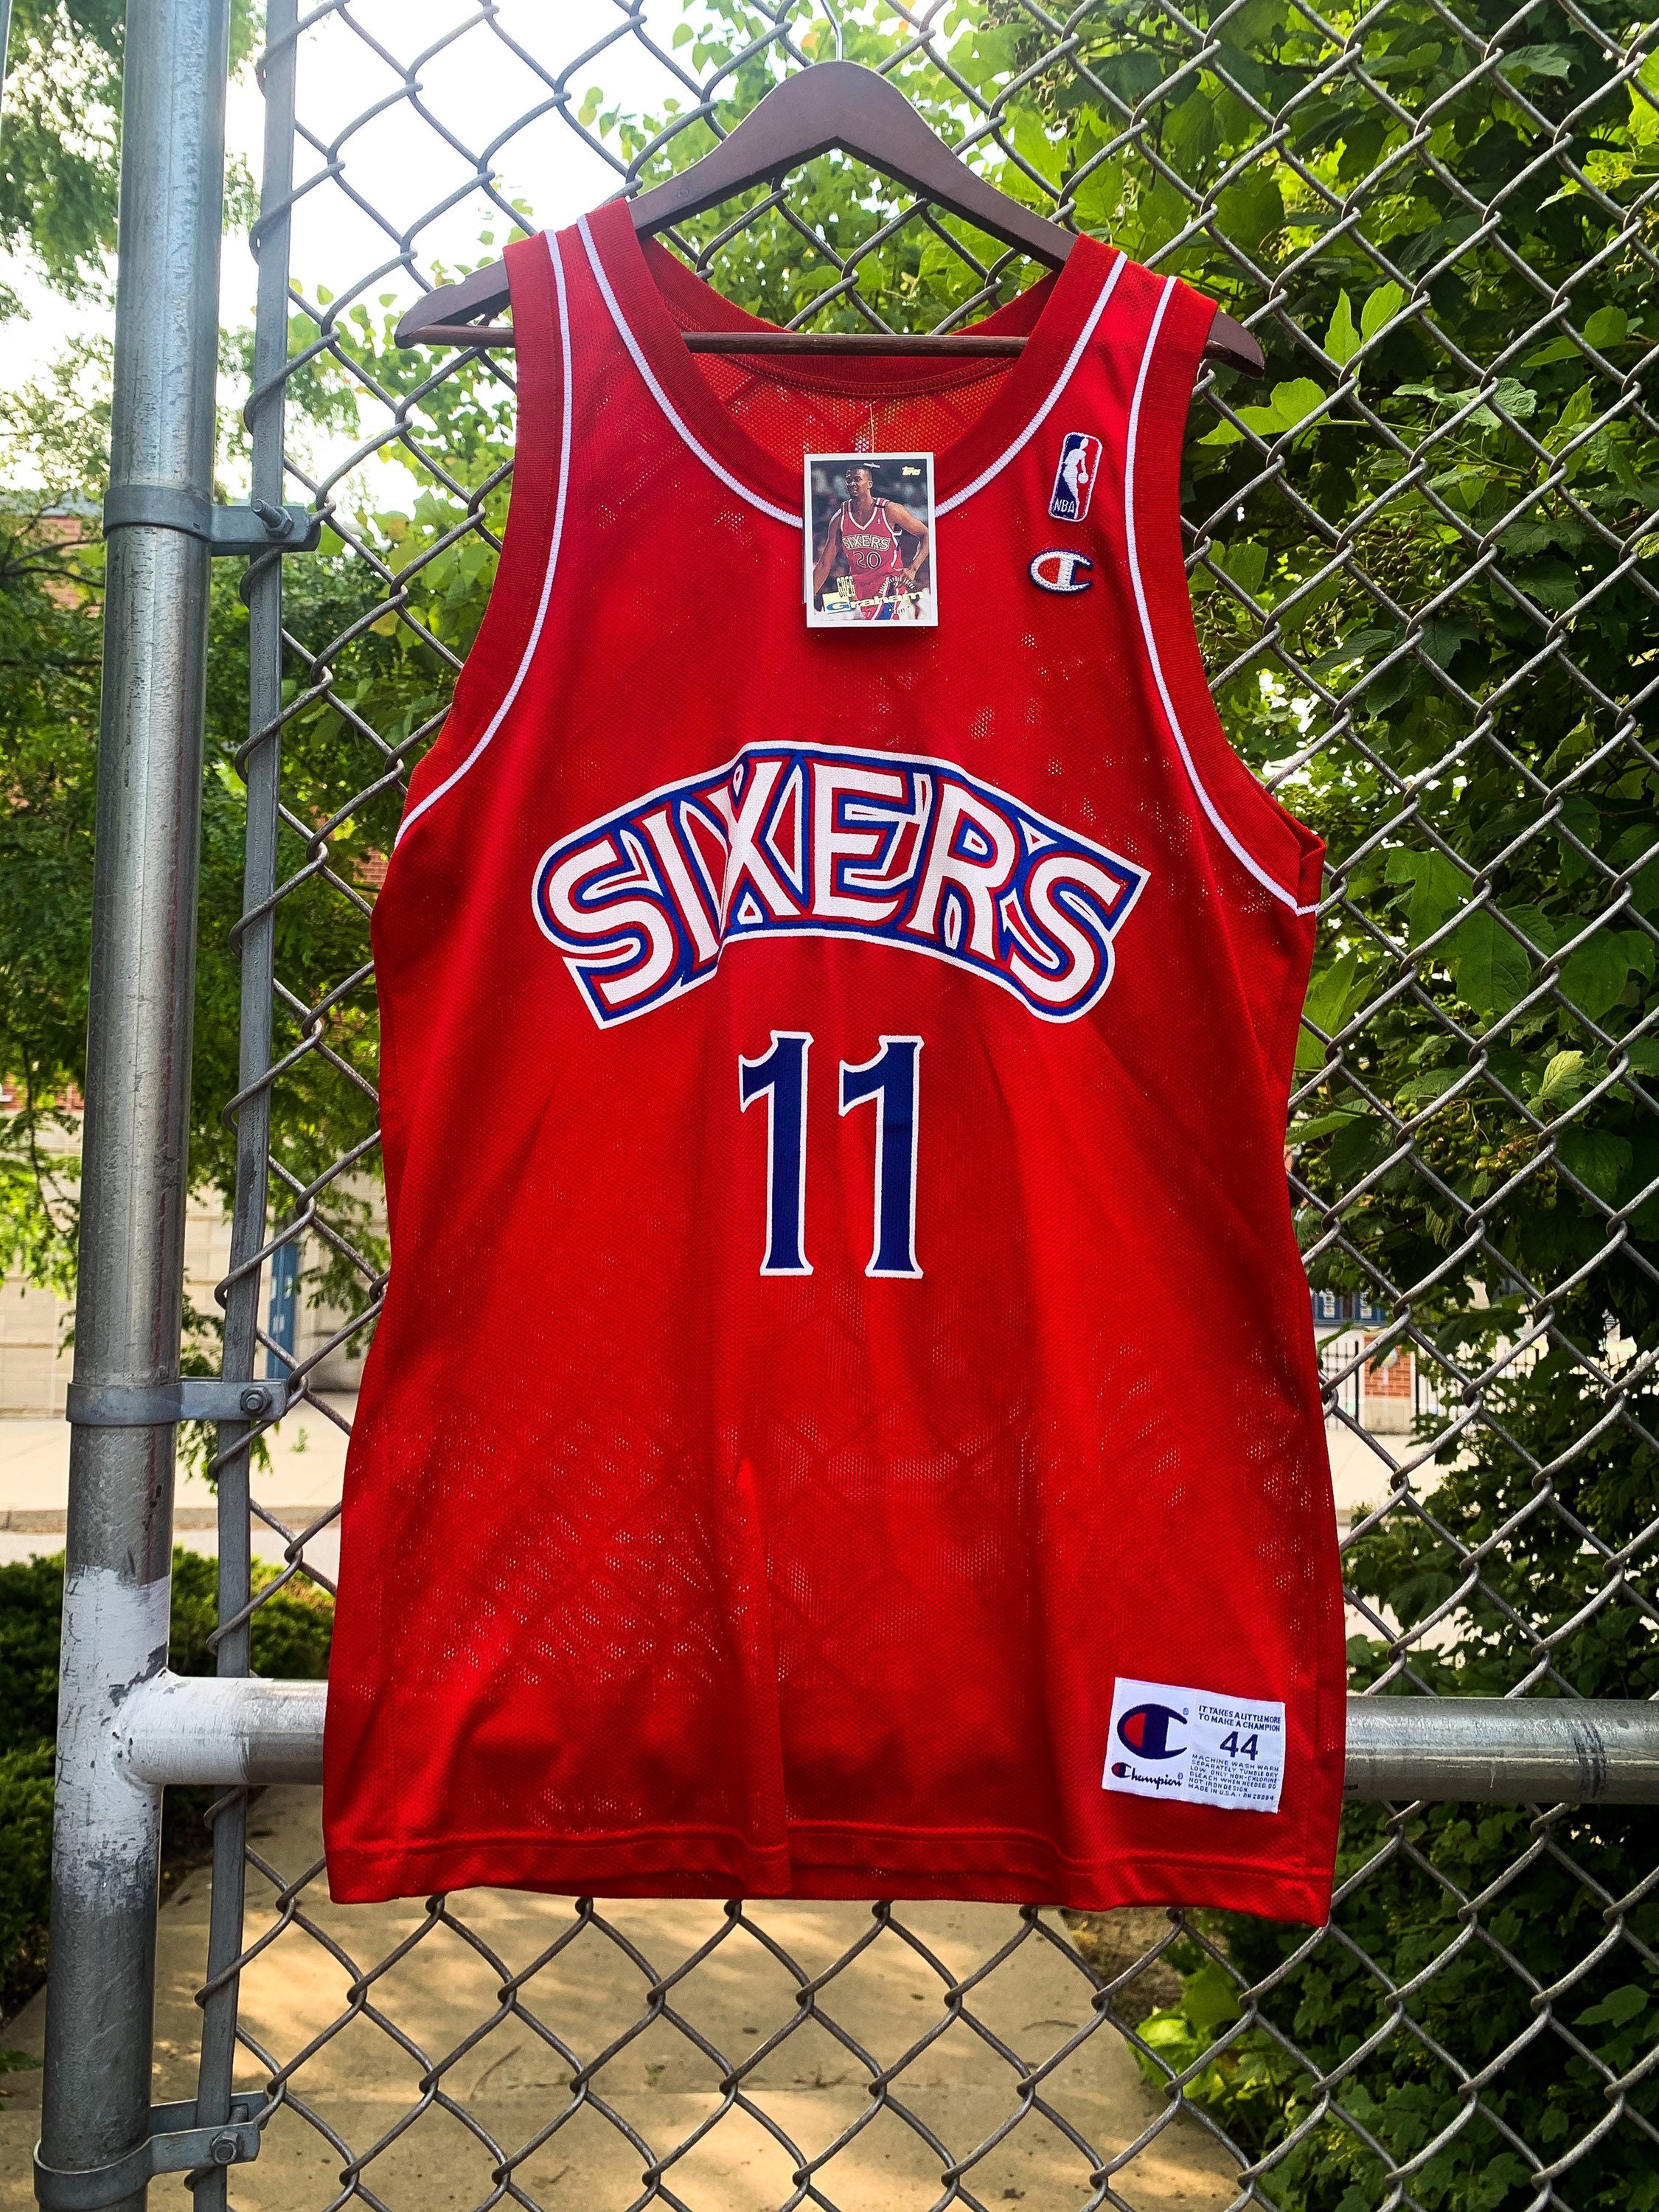 Philadelphia 76ers Mesh Dog Basketball Jersey Size: Medium